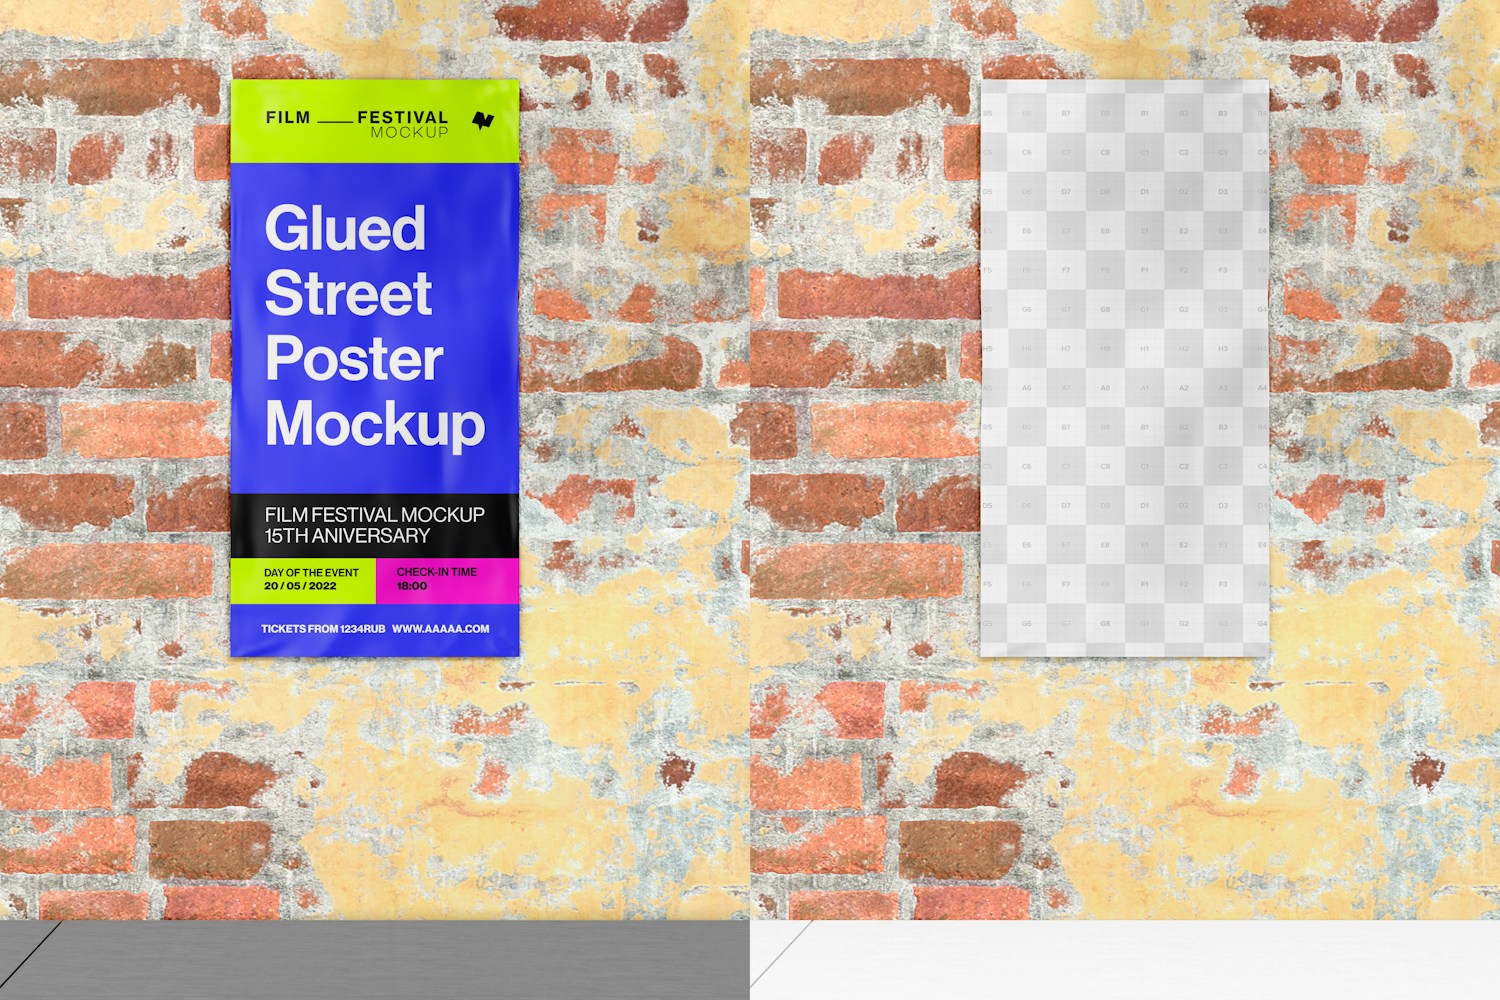 Glued Street Poster Mockup